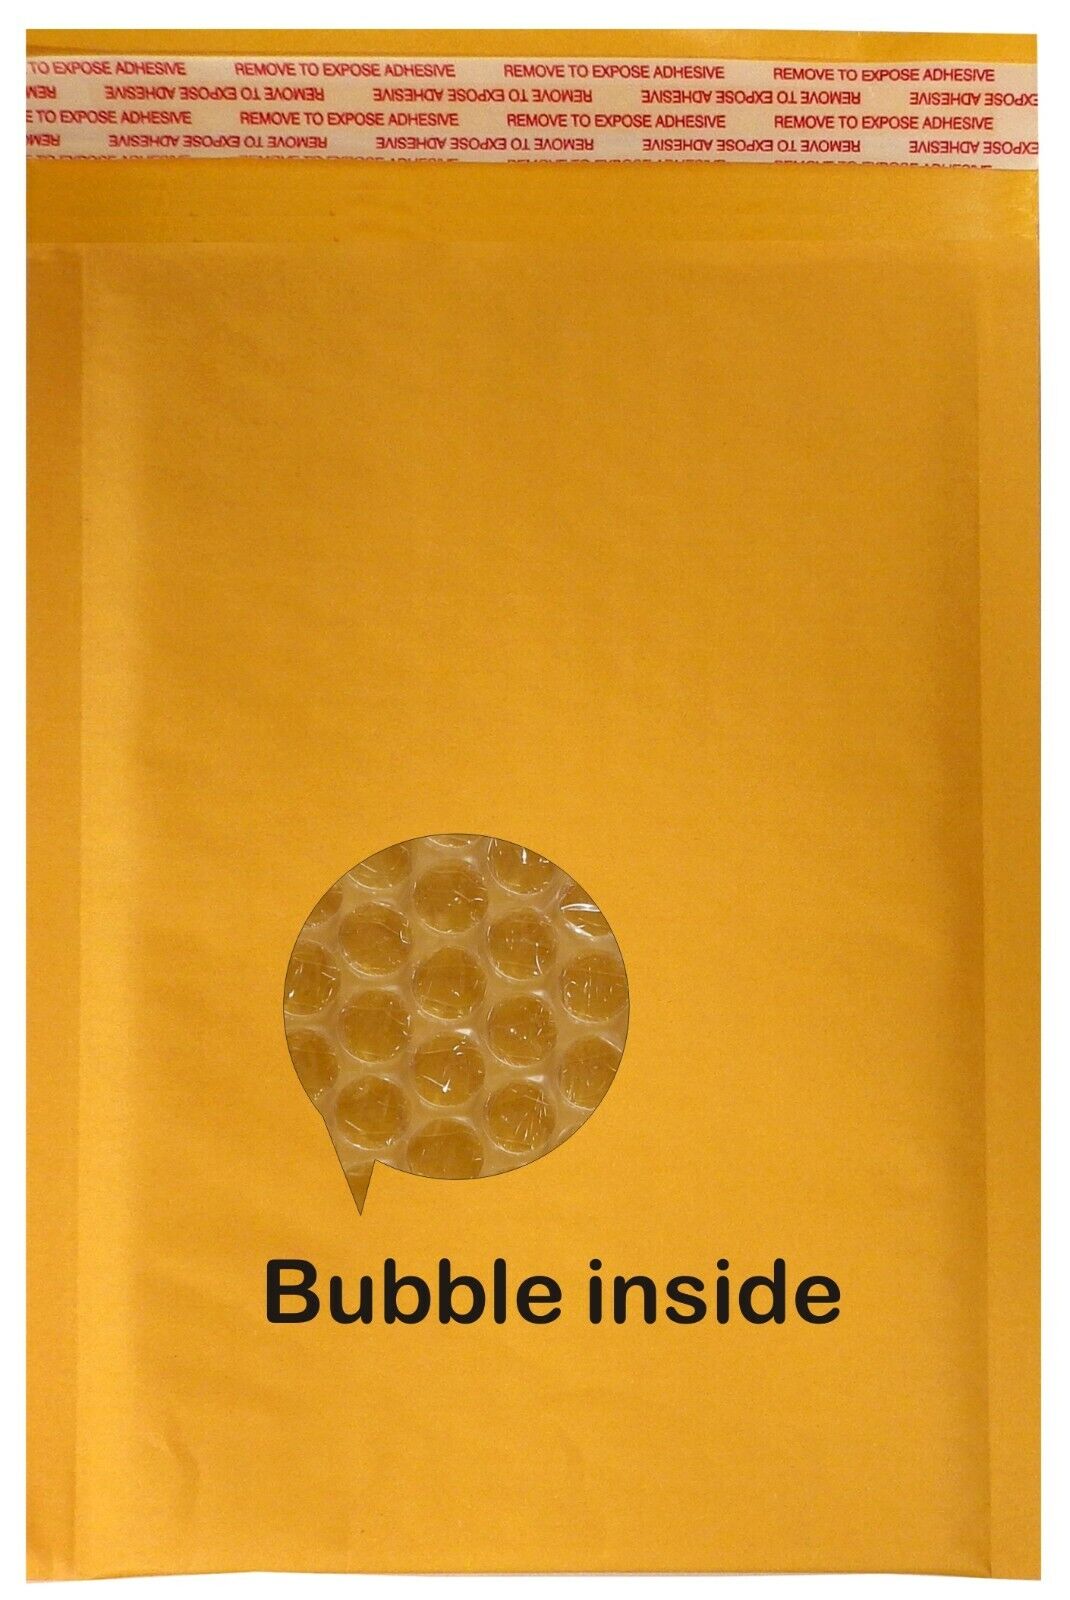 PolycyberUSA  1000 pcs #0 Kraft Bubble Envelopes Mailers 6x9